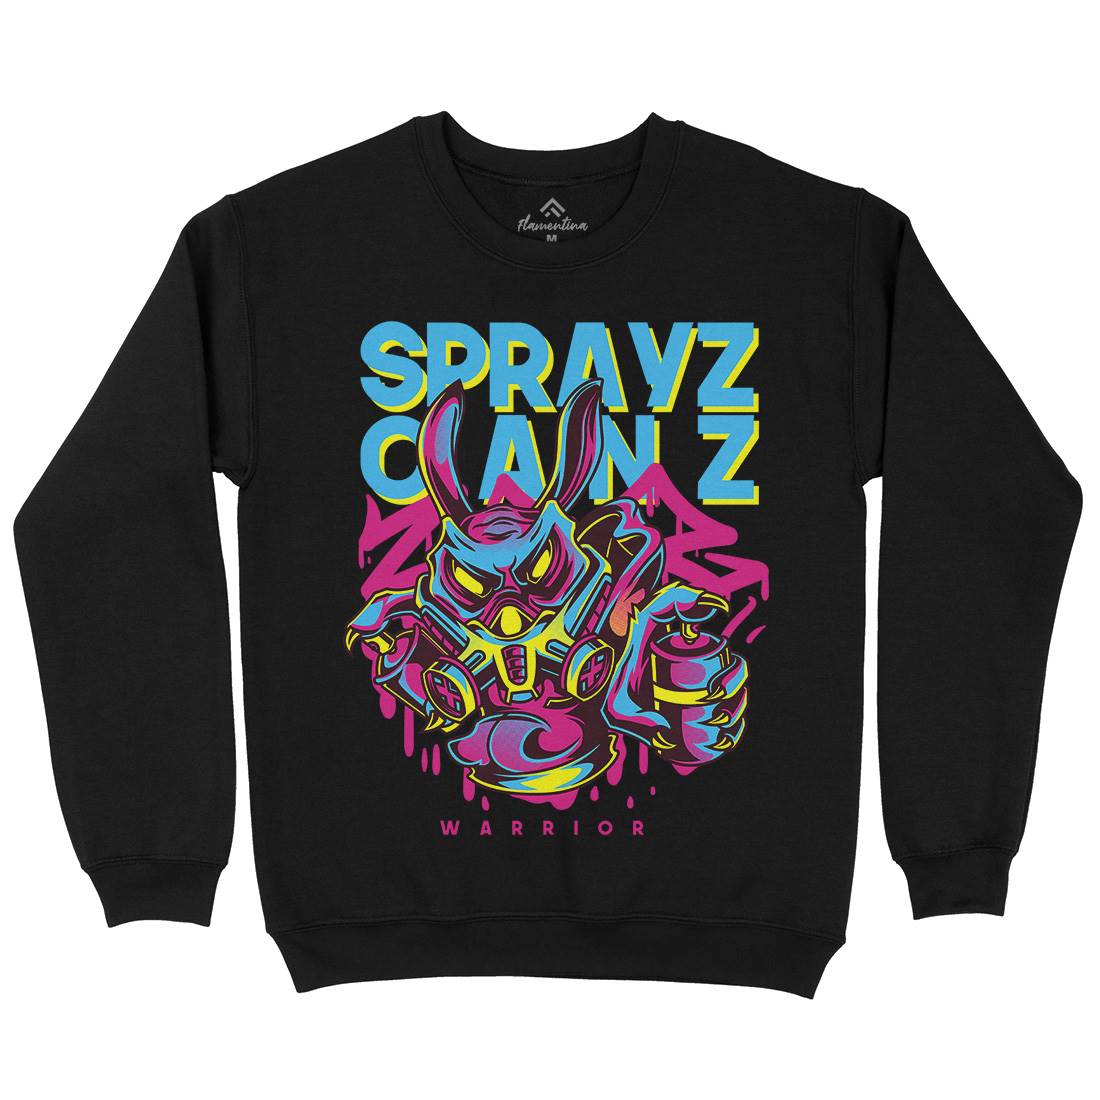 Spray Cans Kids Crew Neck Sweatshirt Graffiti D833